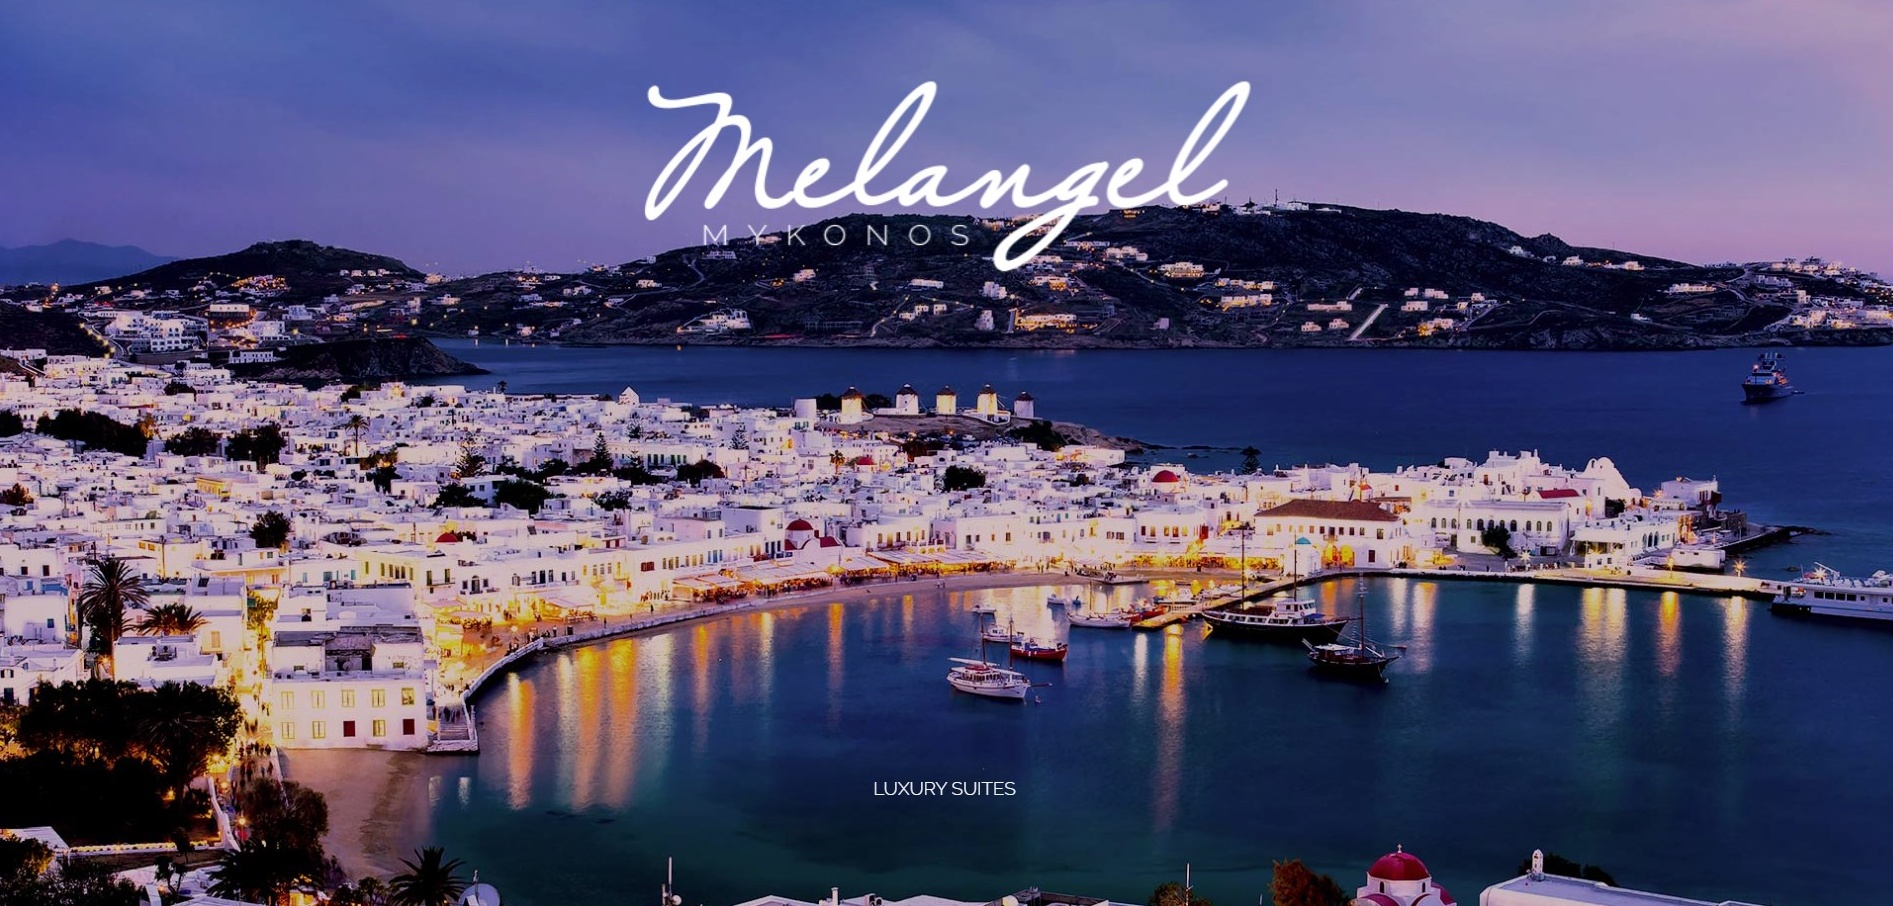 Melangel Luxury Suites, Mykonos, Greece